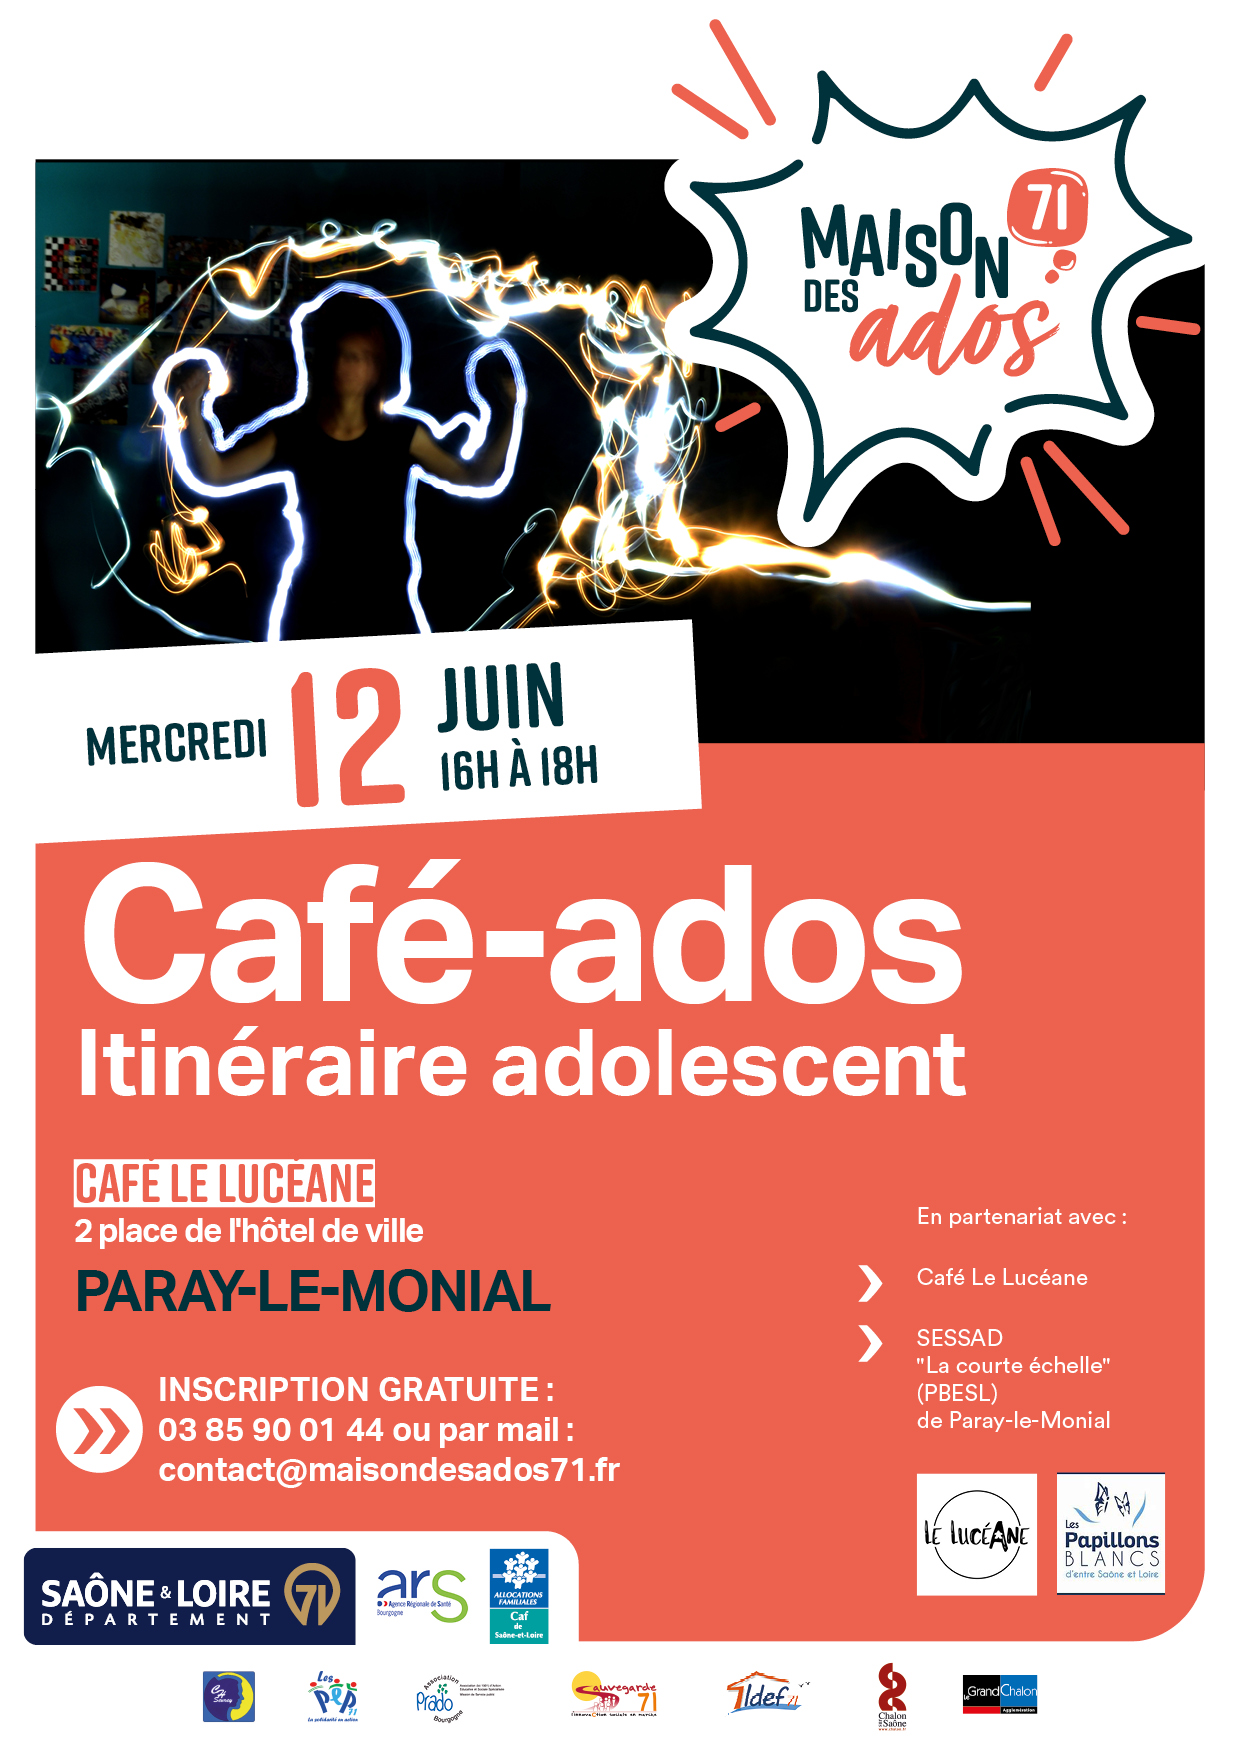 PARAY LE MONIAL / CAFE ADOS ITINERAIRE ADOLESCENT